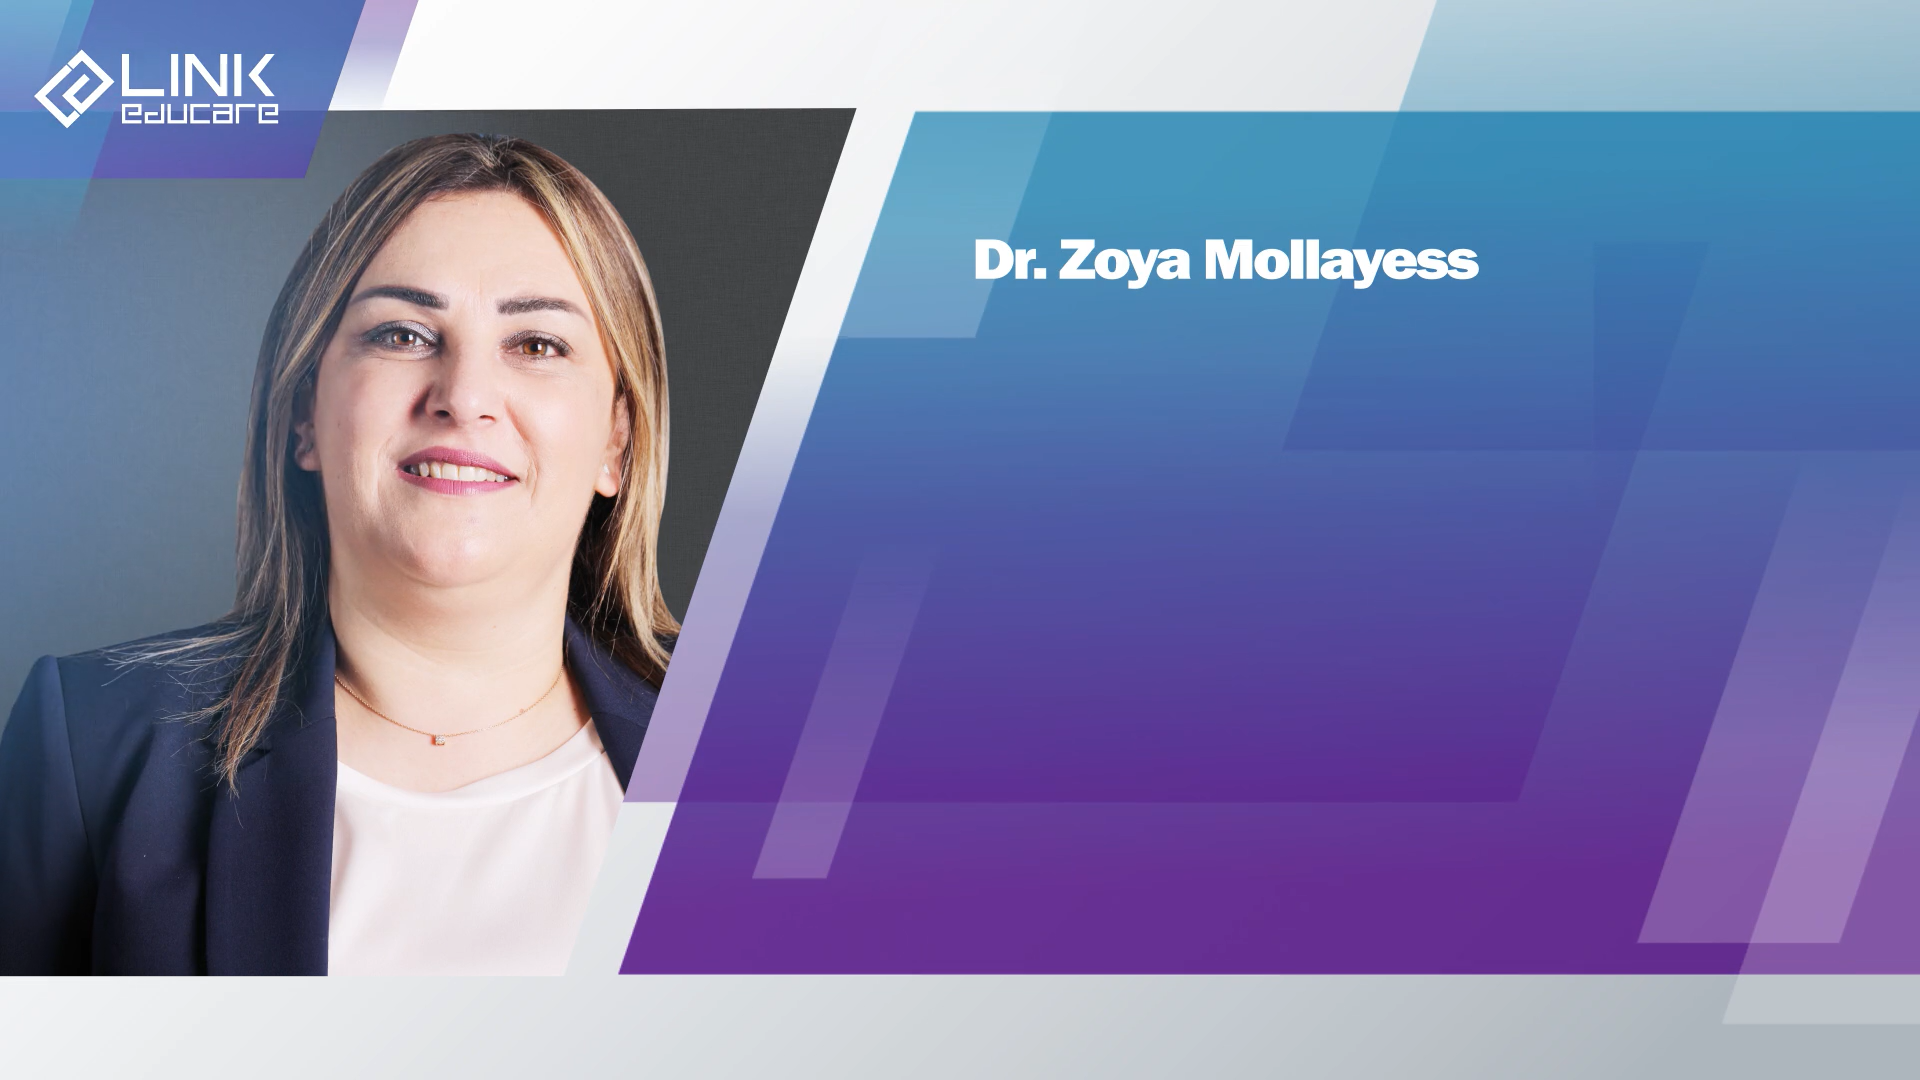 Dr. Zoya Mollayess